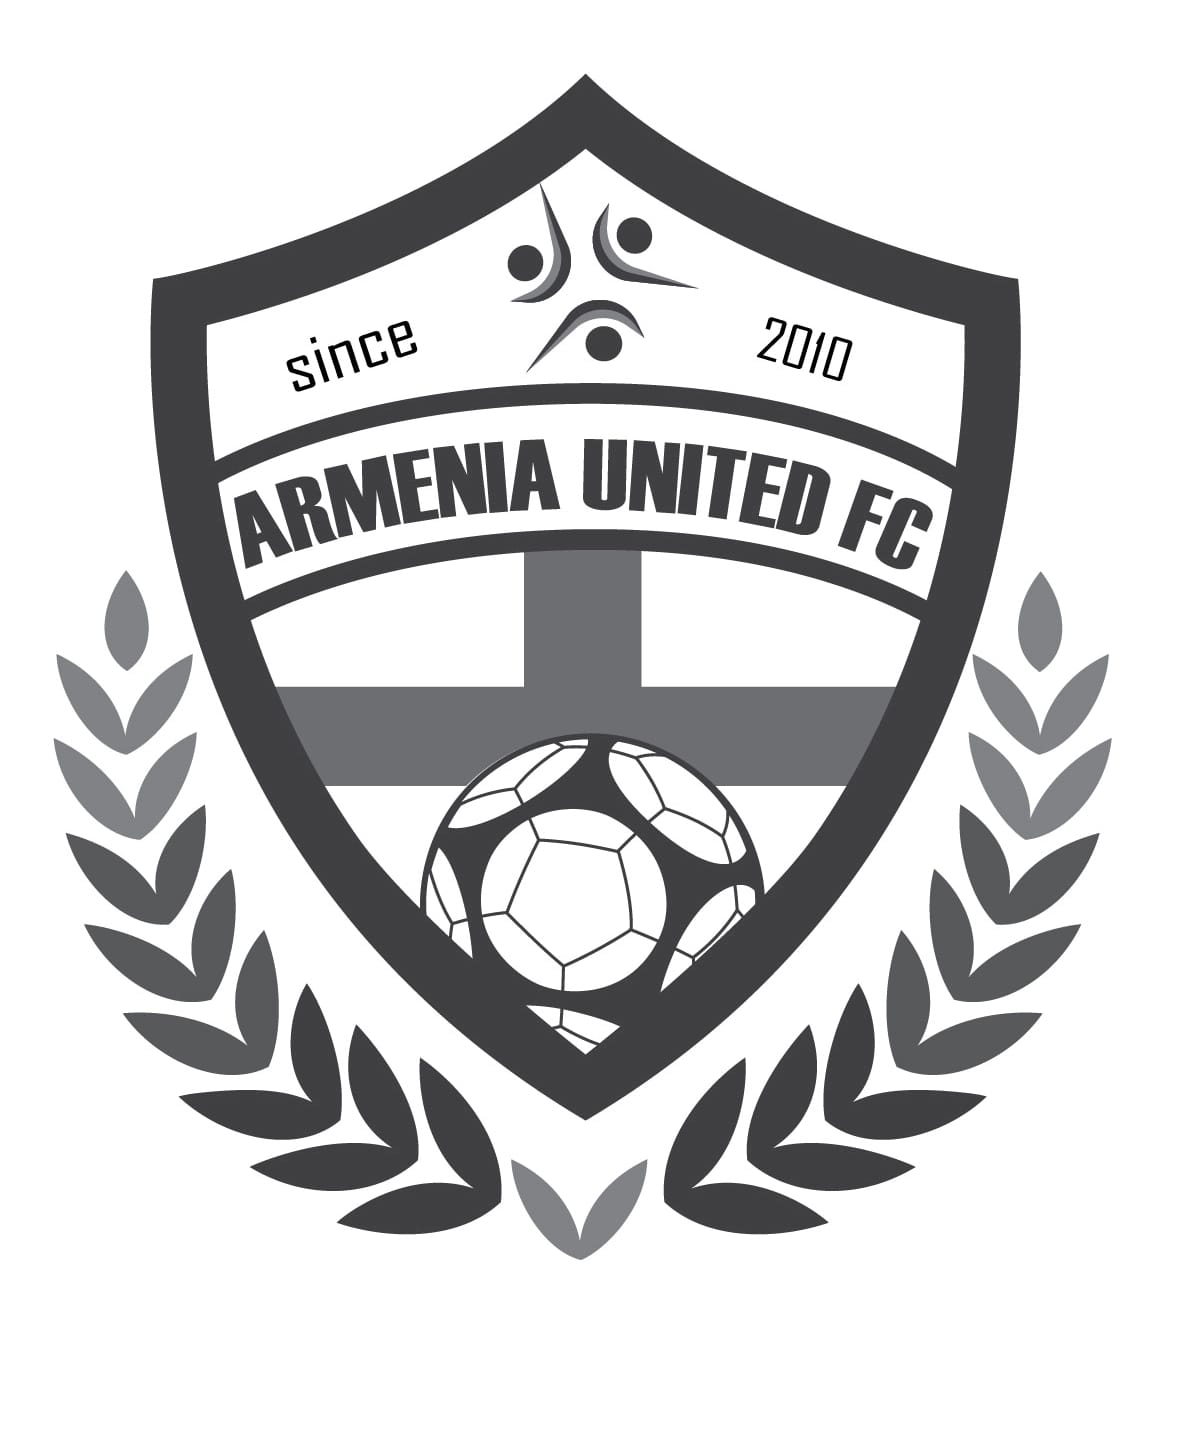 ARMENIA UNITED